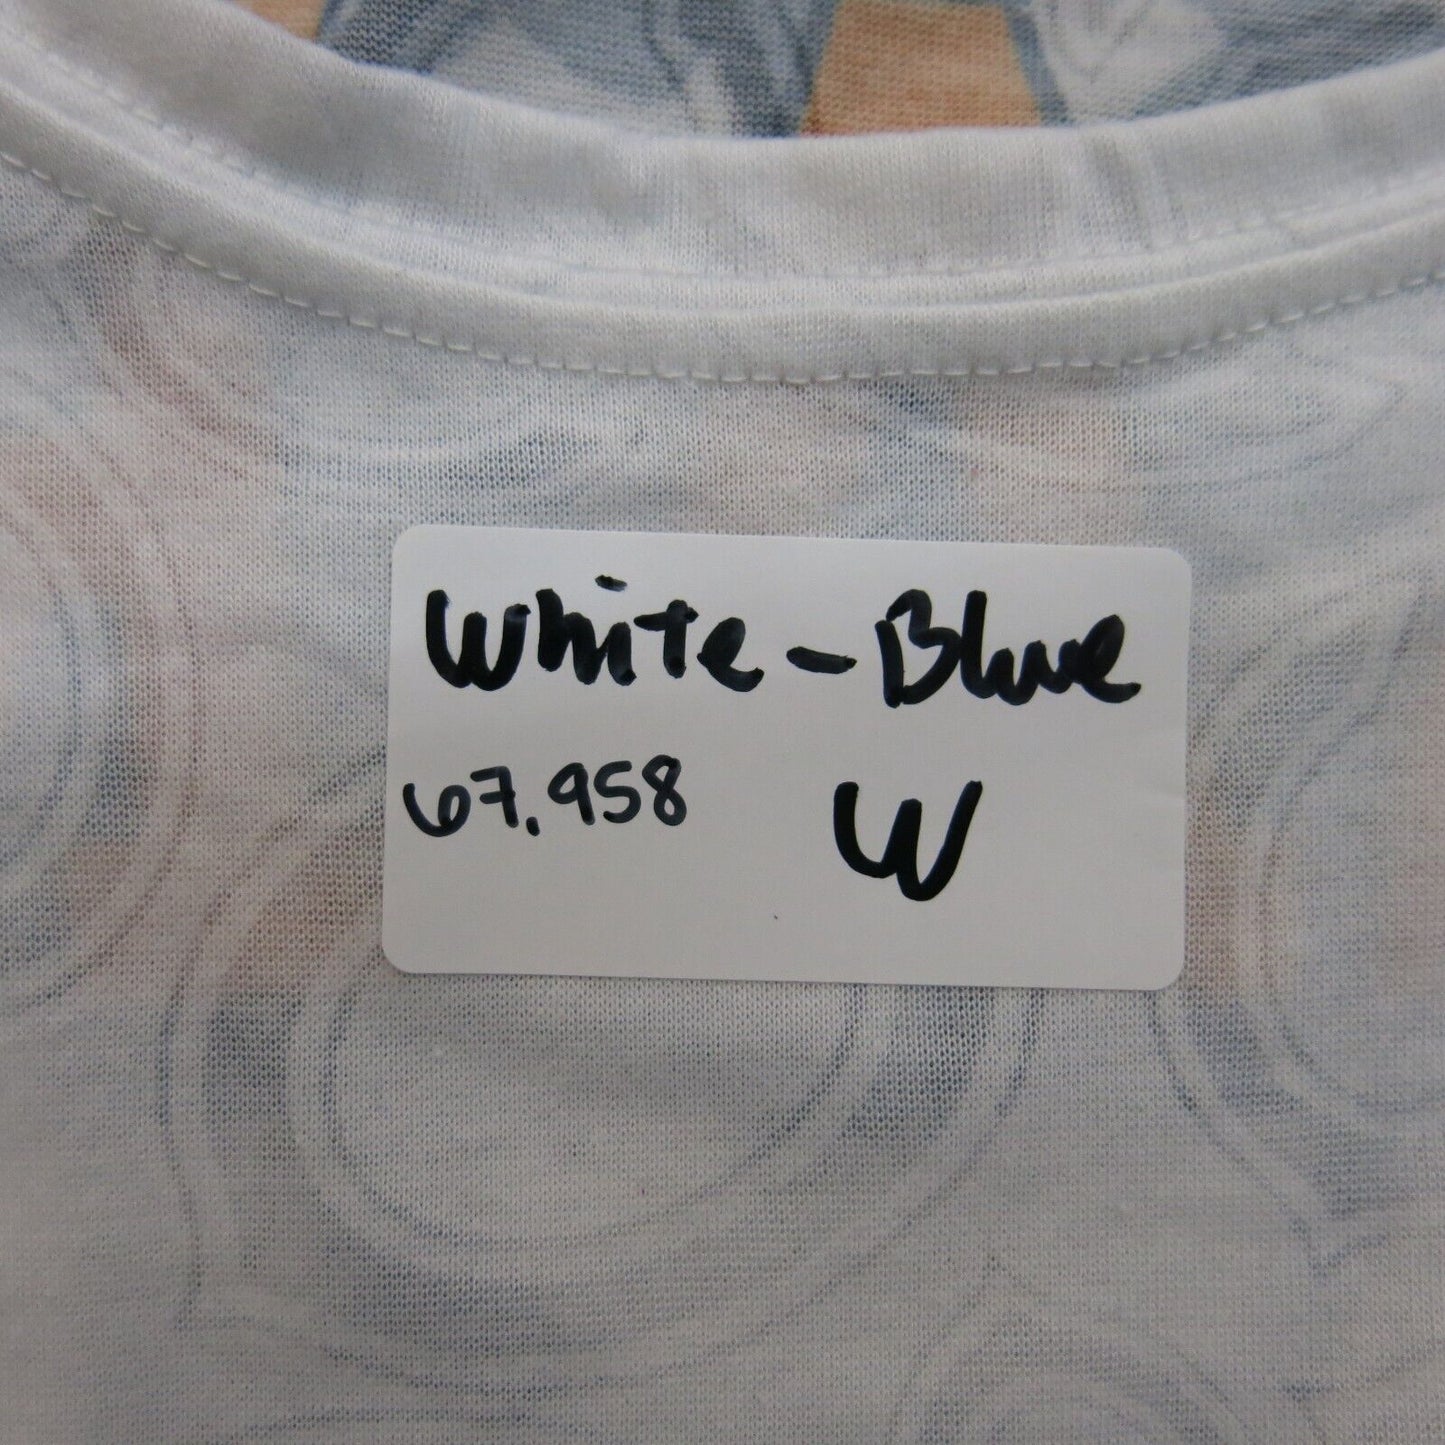 NFL Team Apparel Womens Long Sleeve Shirt Crew Neck Bears Logo White Blue Size S